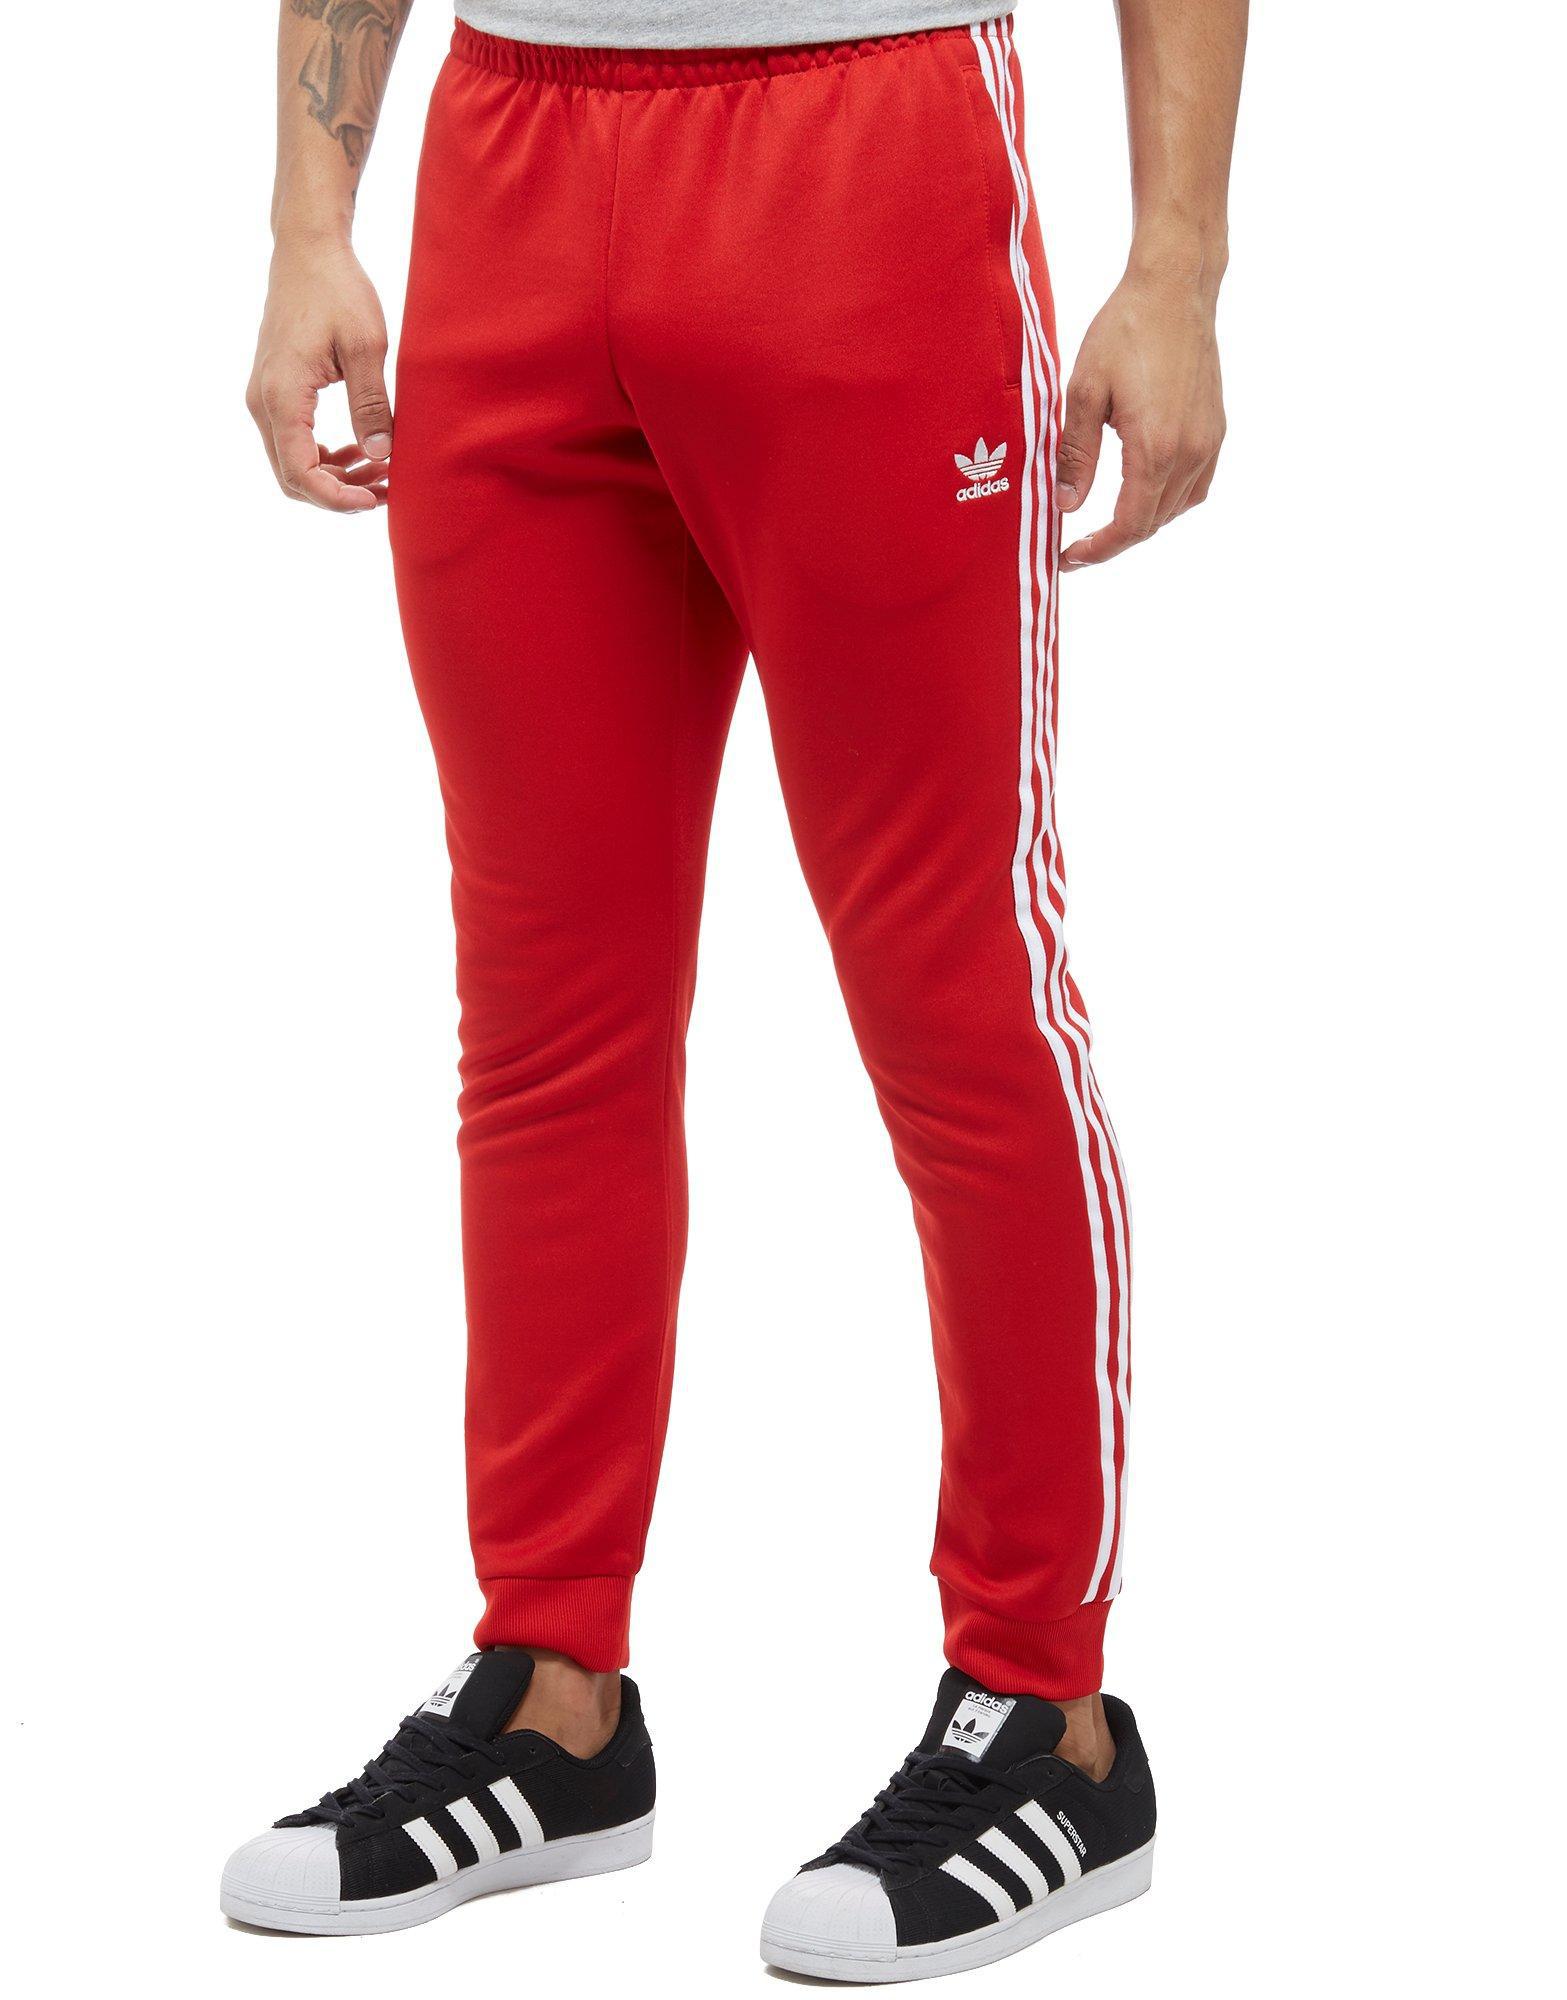 adidas scarlet red pants